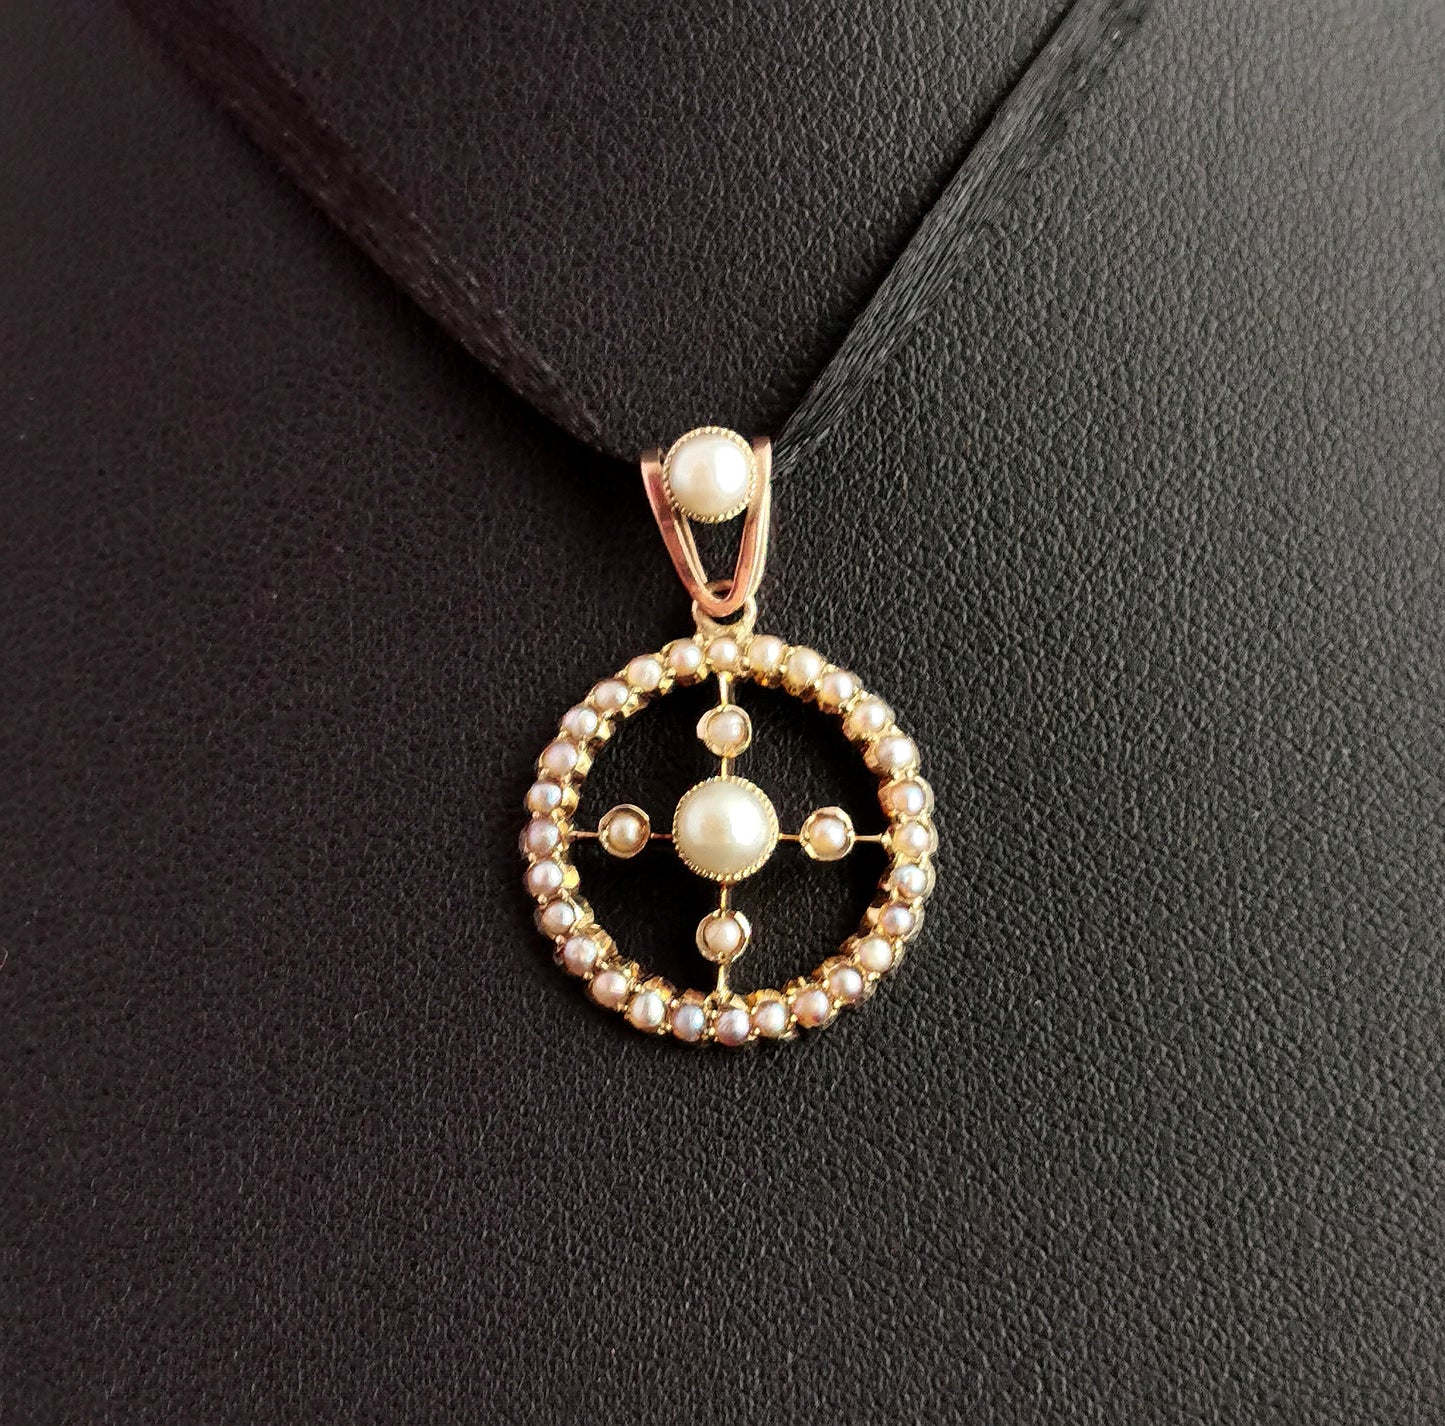 Antique Victorian split pearl pendant, 9ct gold